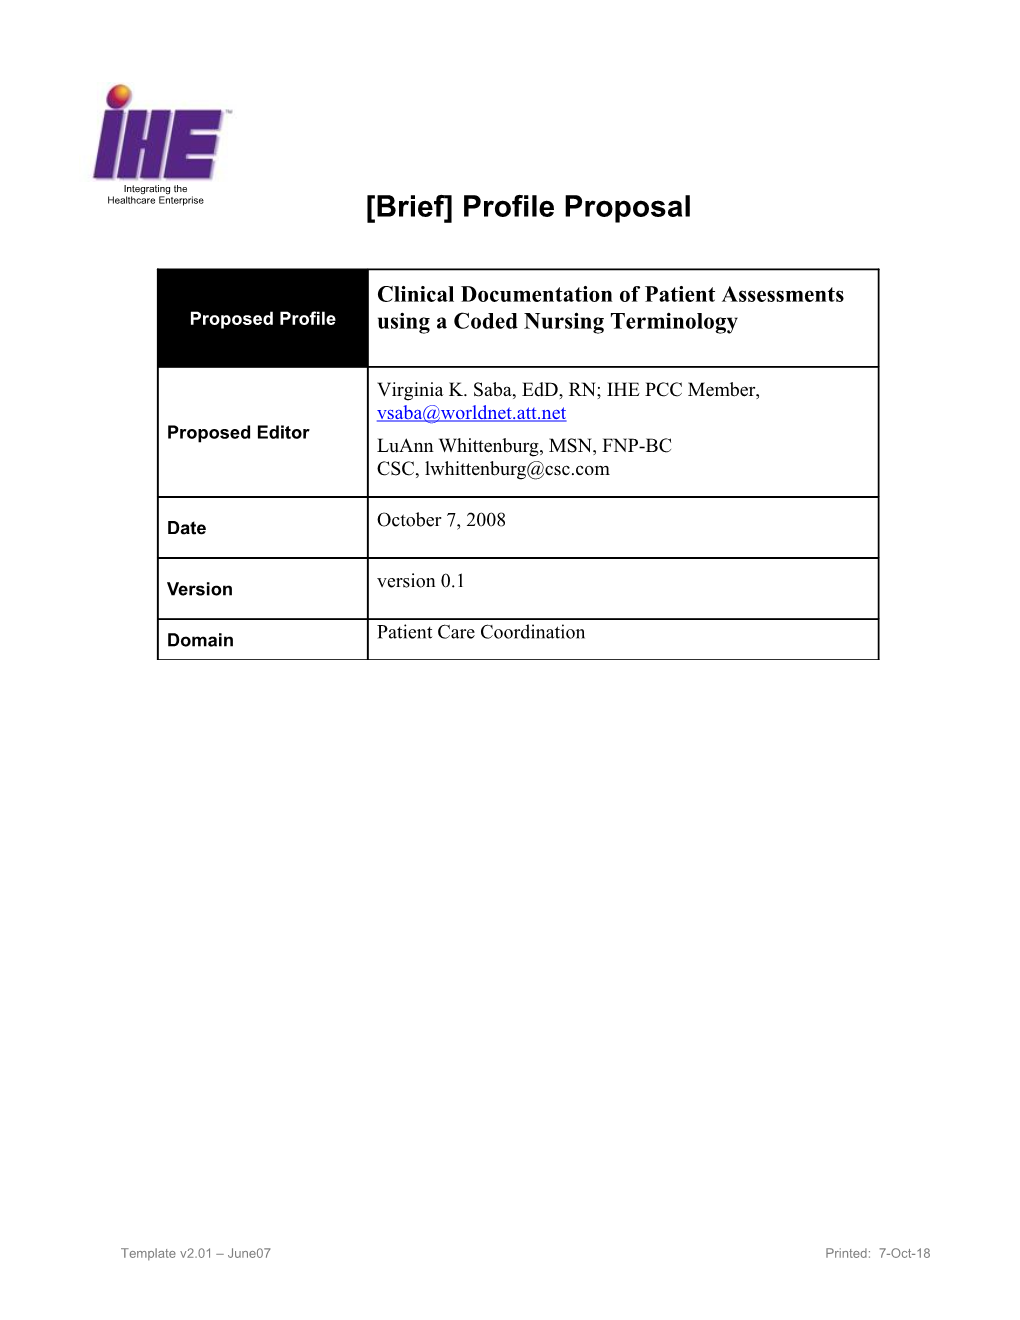 Brief Profile Proposalpage 2